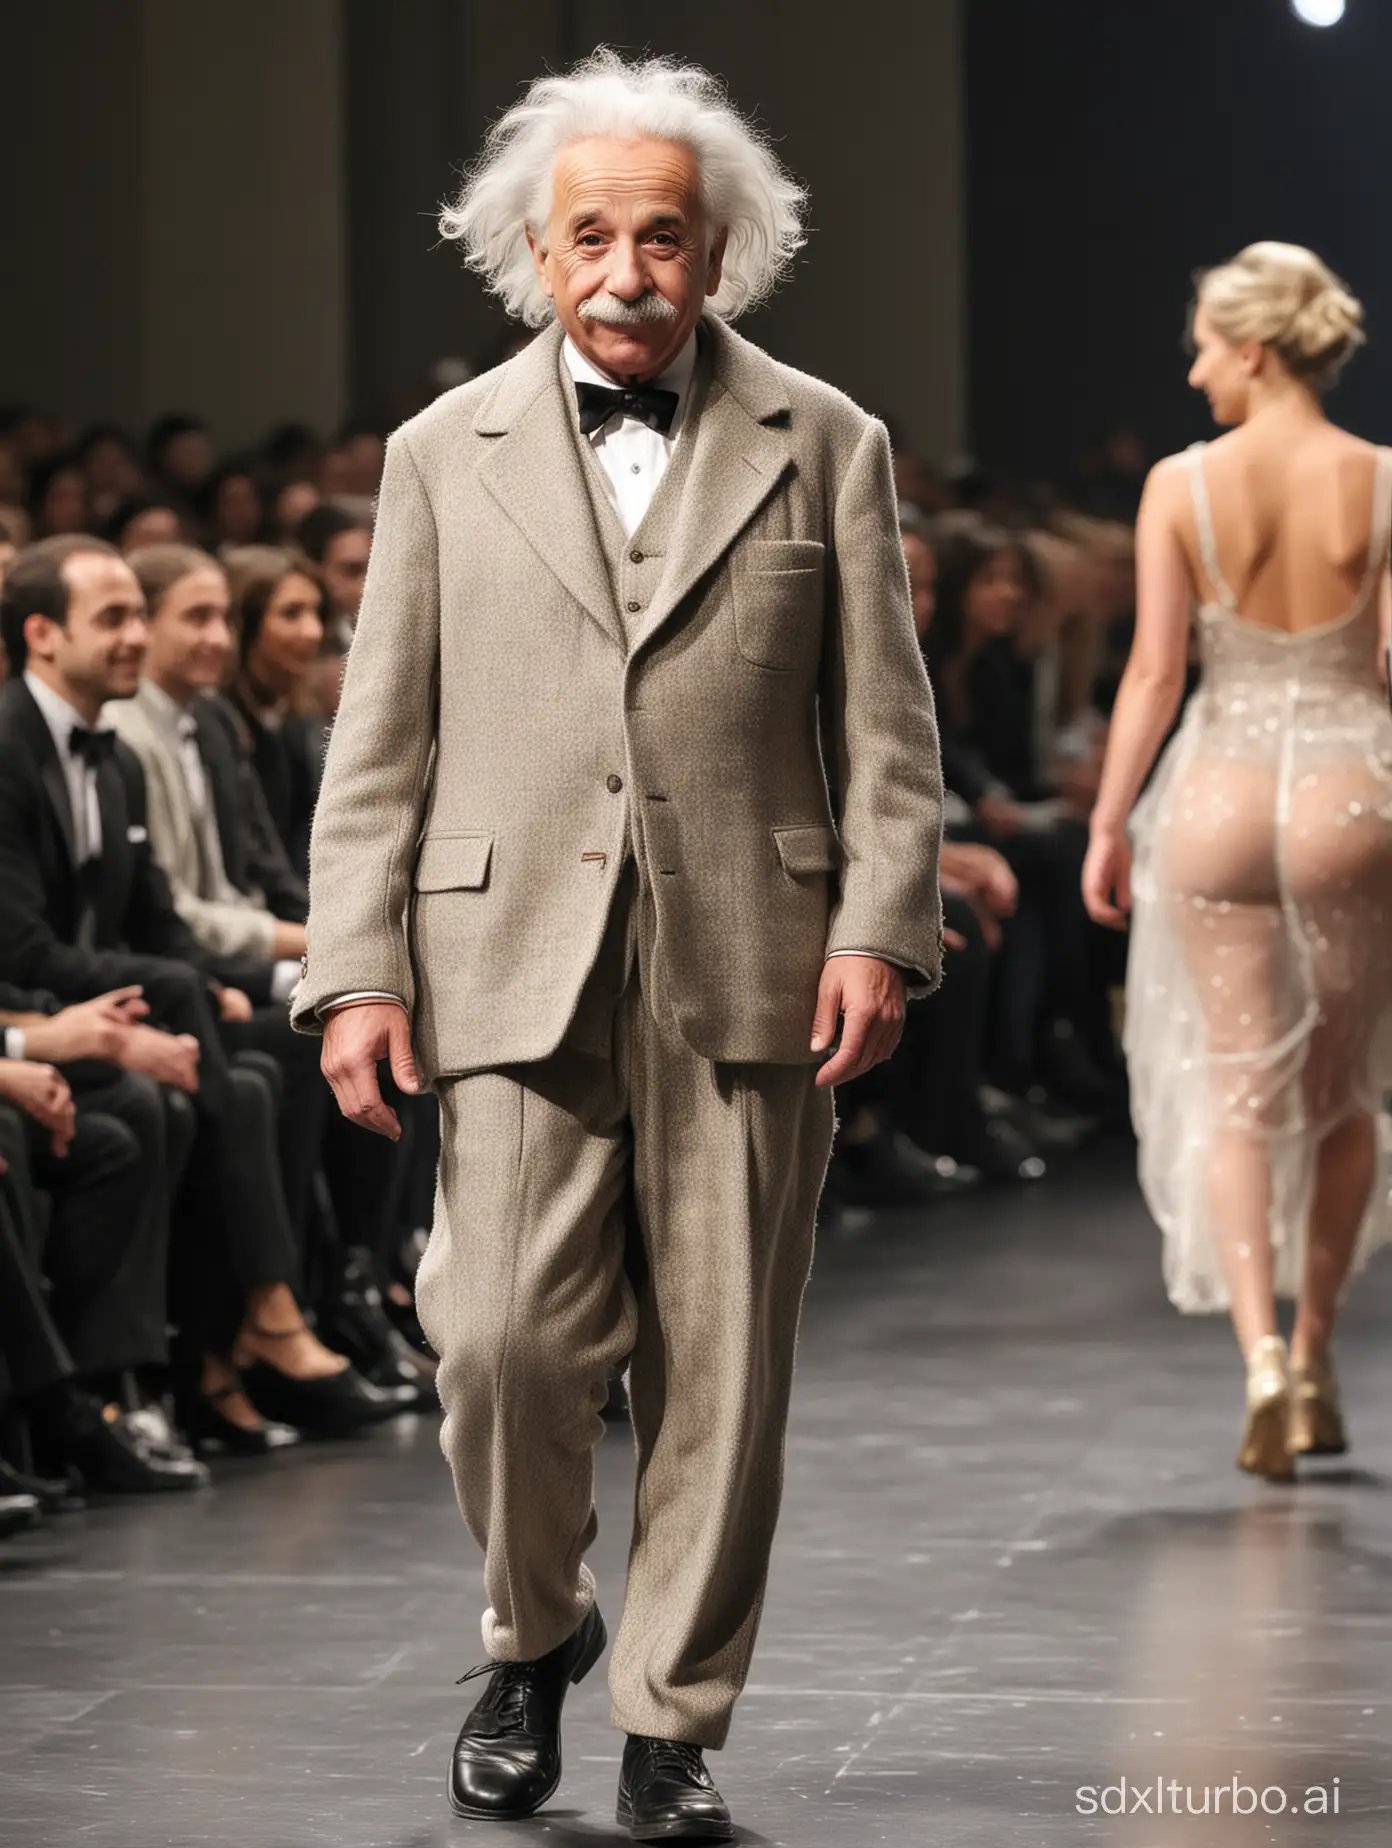 Albert Einstein walks the runway, ultra delicate Einstein, real Einstein, (smile), (full body image), (audience on both sides), Paris collection runway, (eccentric fashion), outrageous fashion, flashy fashion, Paris collection